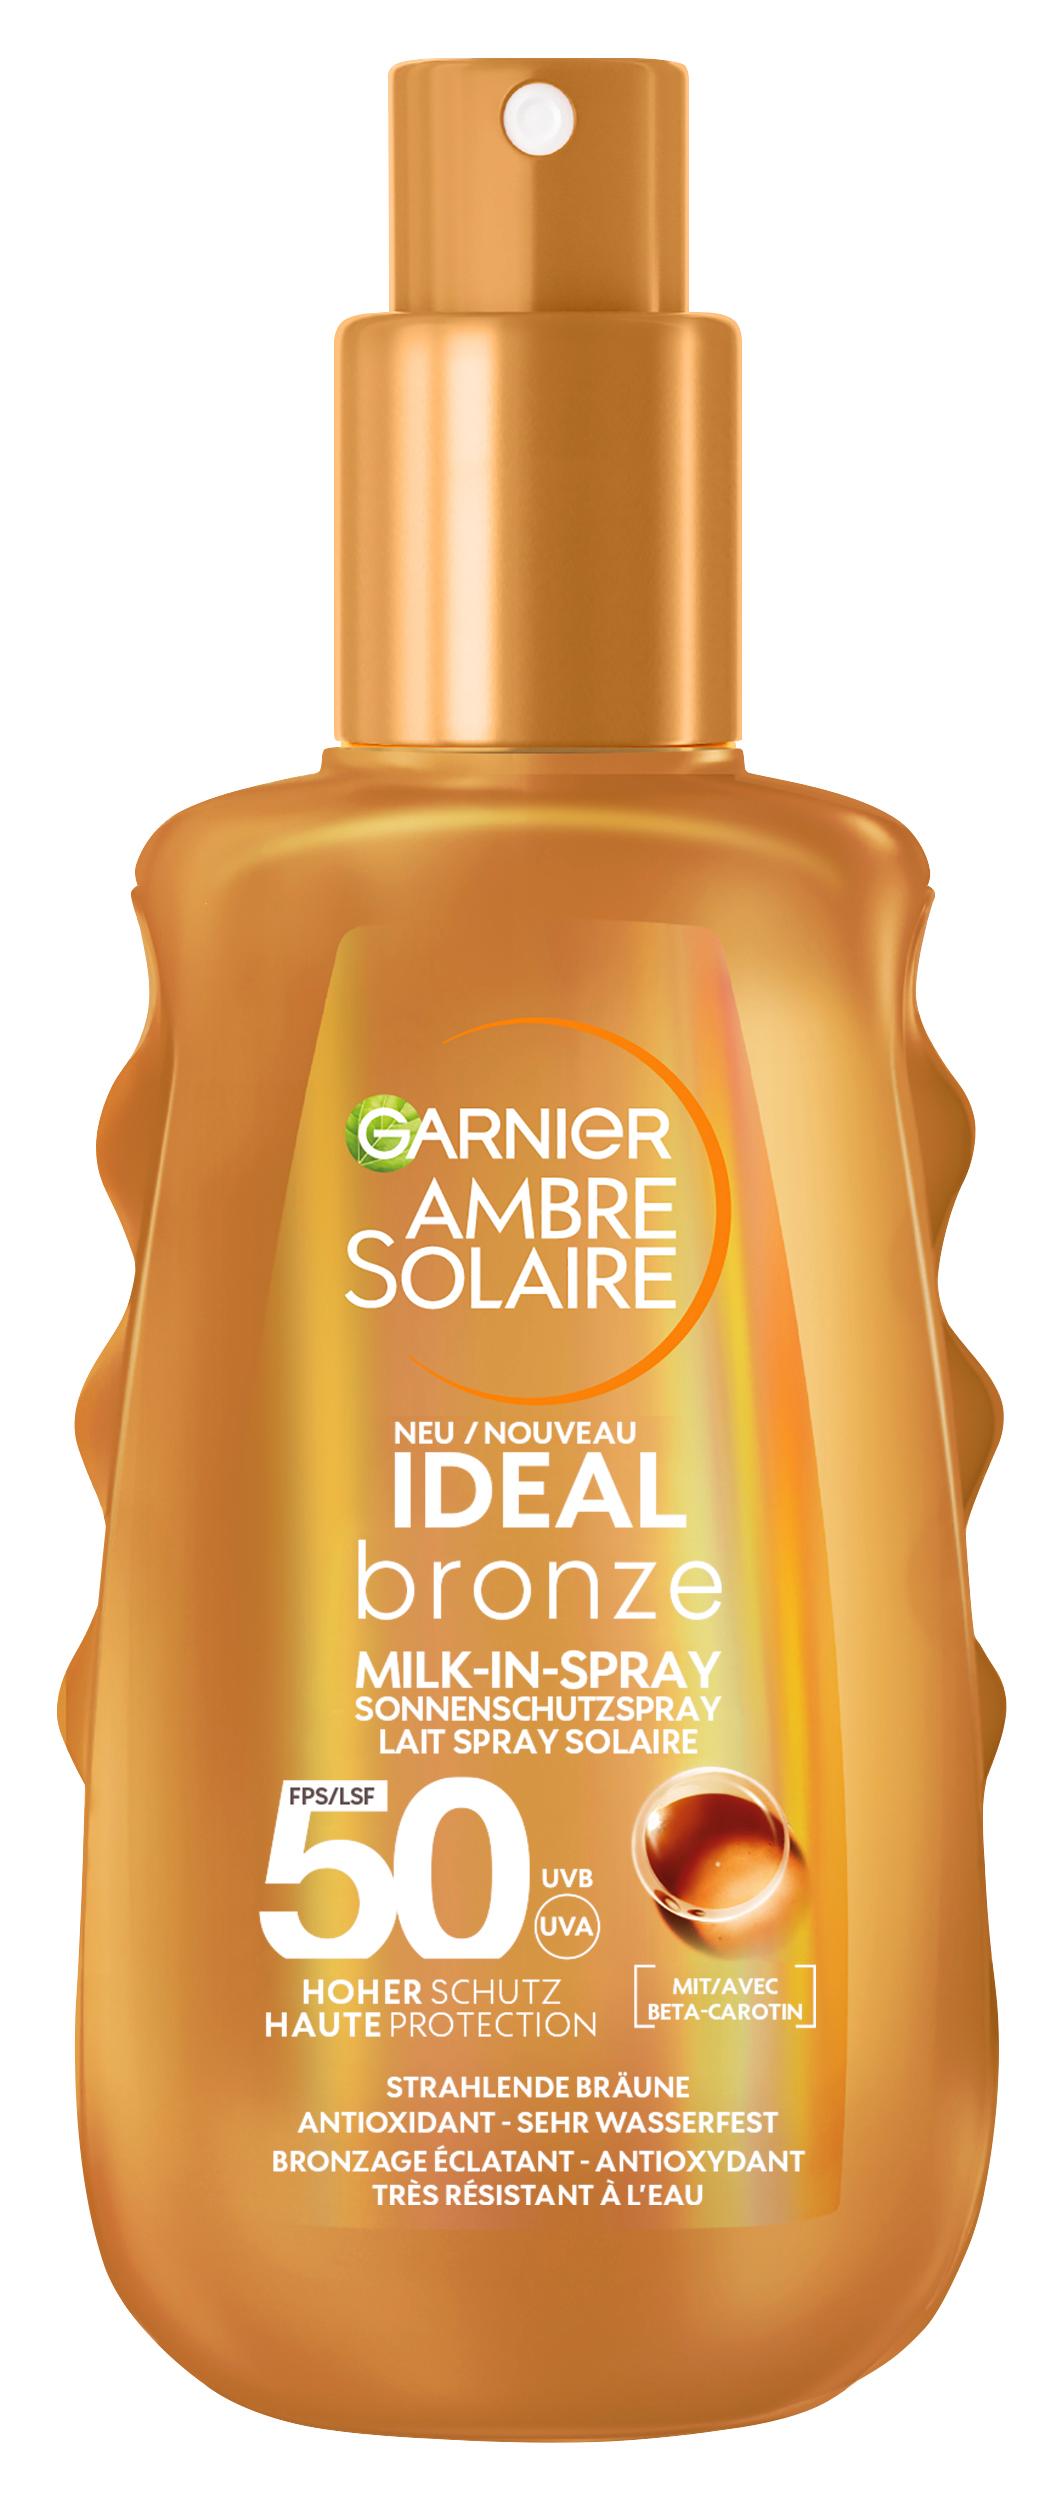 Ambre Solaire - Ideal Bronze Milk-in-Spray Sunscreen Spray SPF 50